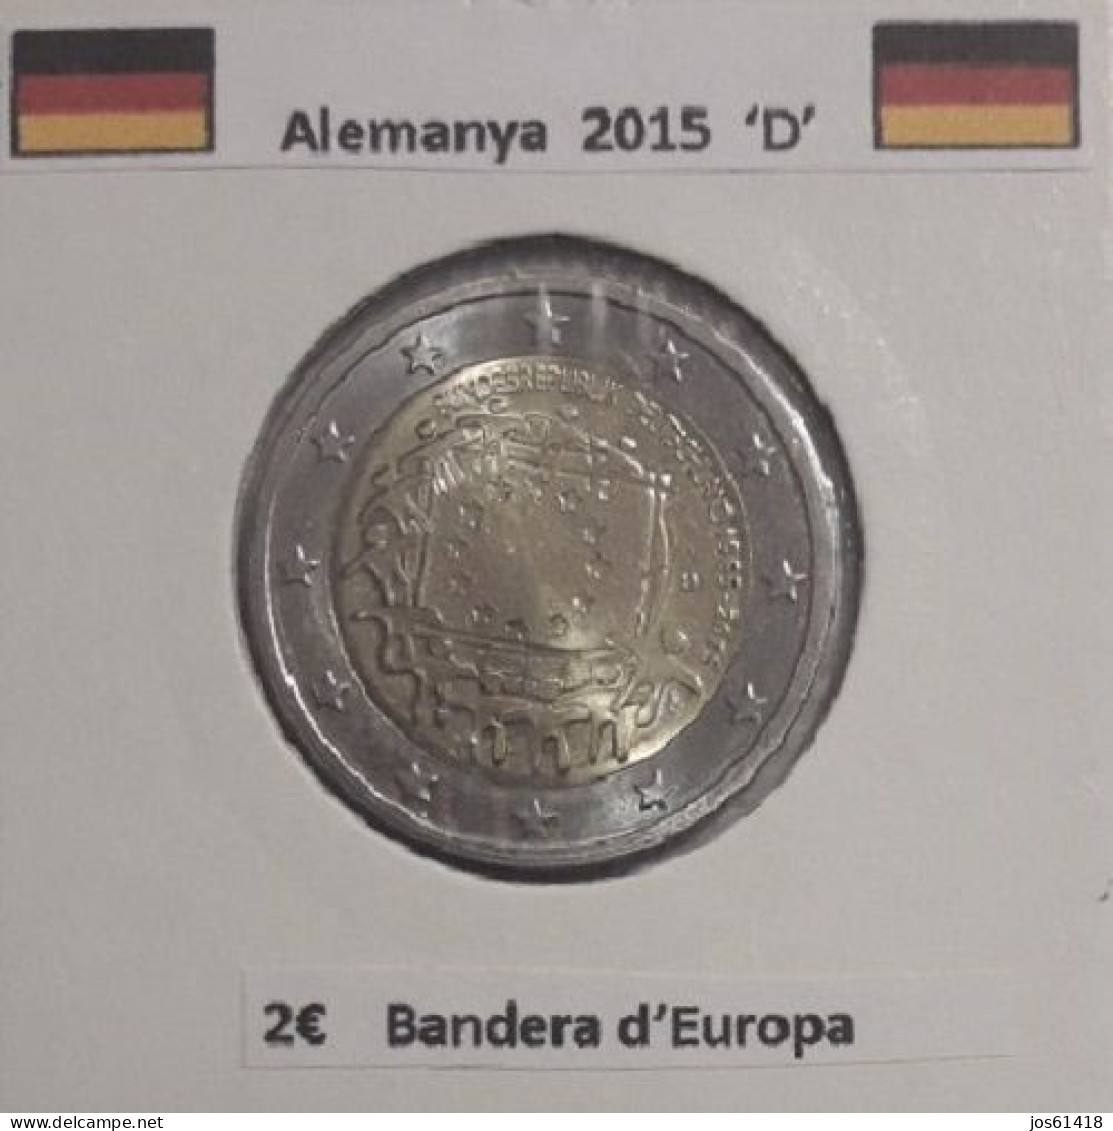 2 Euros Alemania / Germany  2015 30 Jahre Europa Flagge  D O J Sin Circular - Deutschland